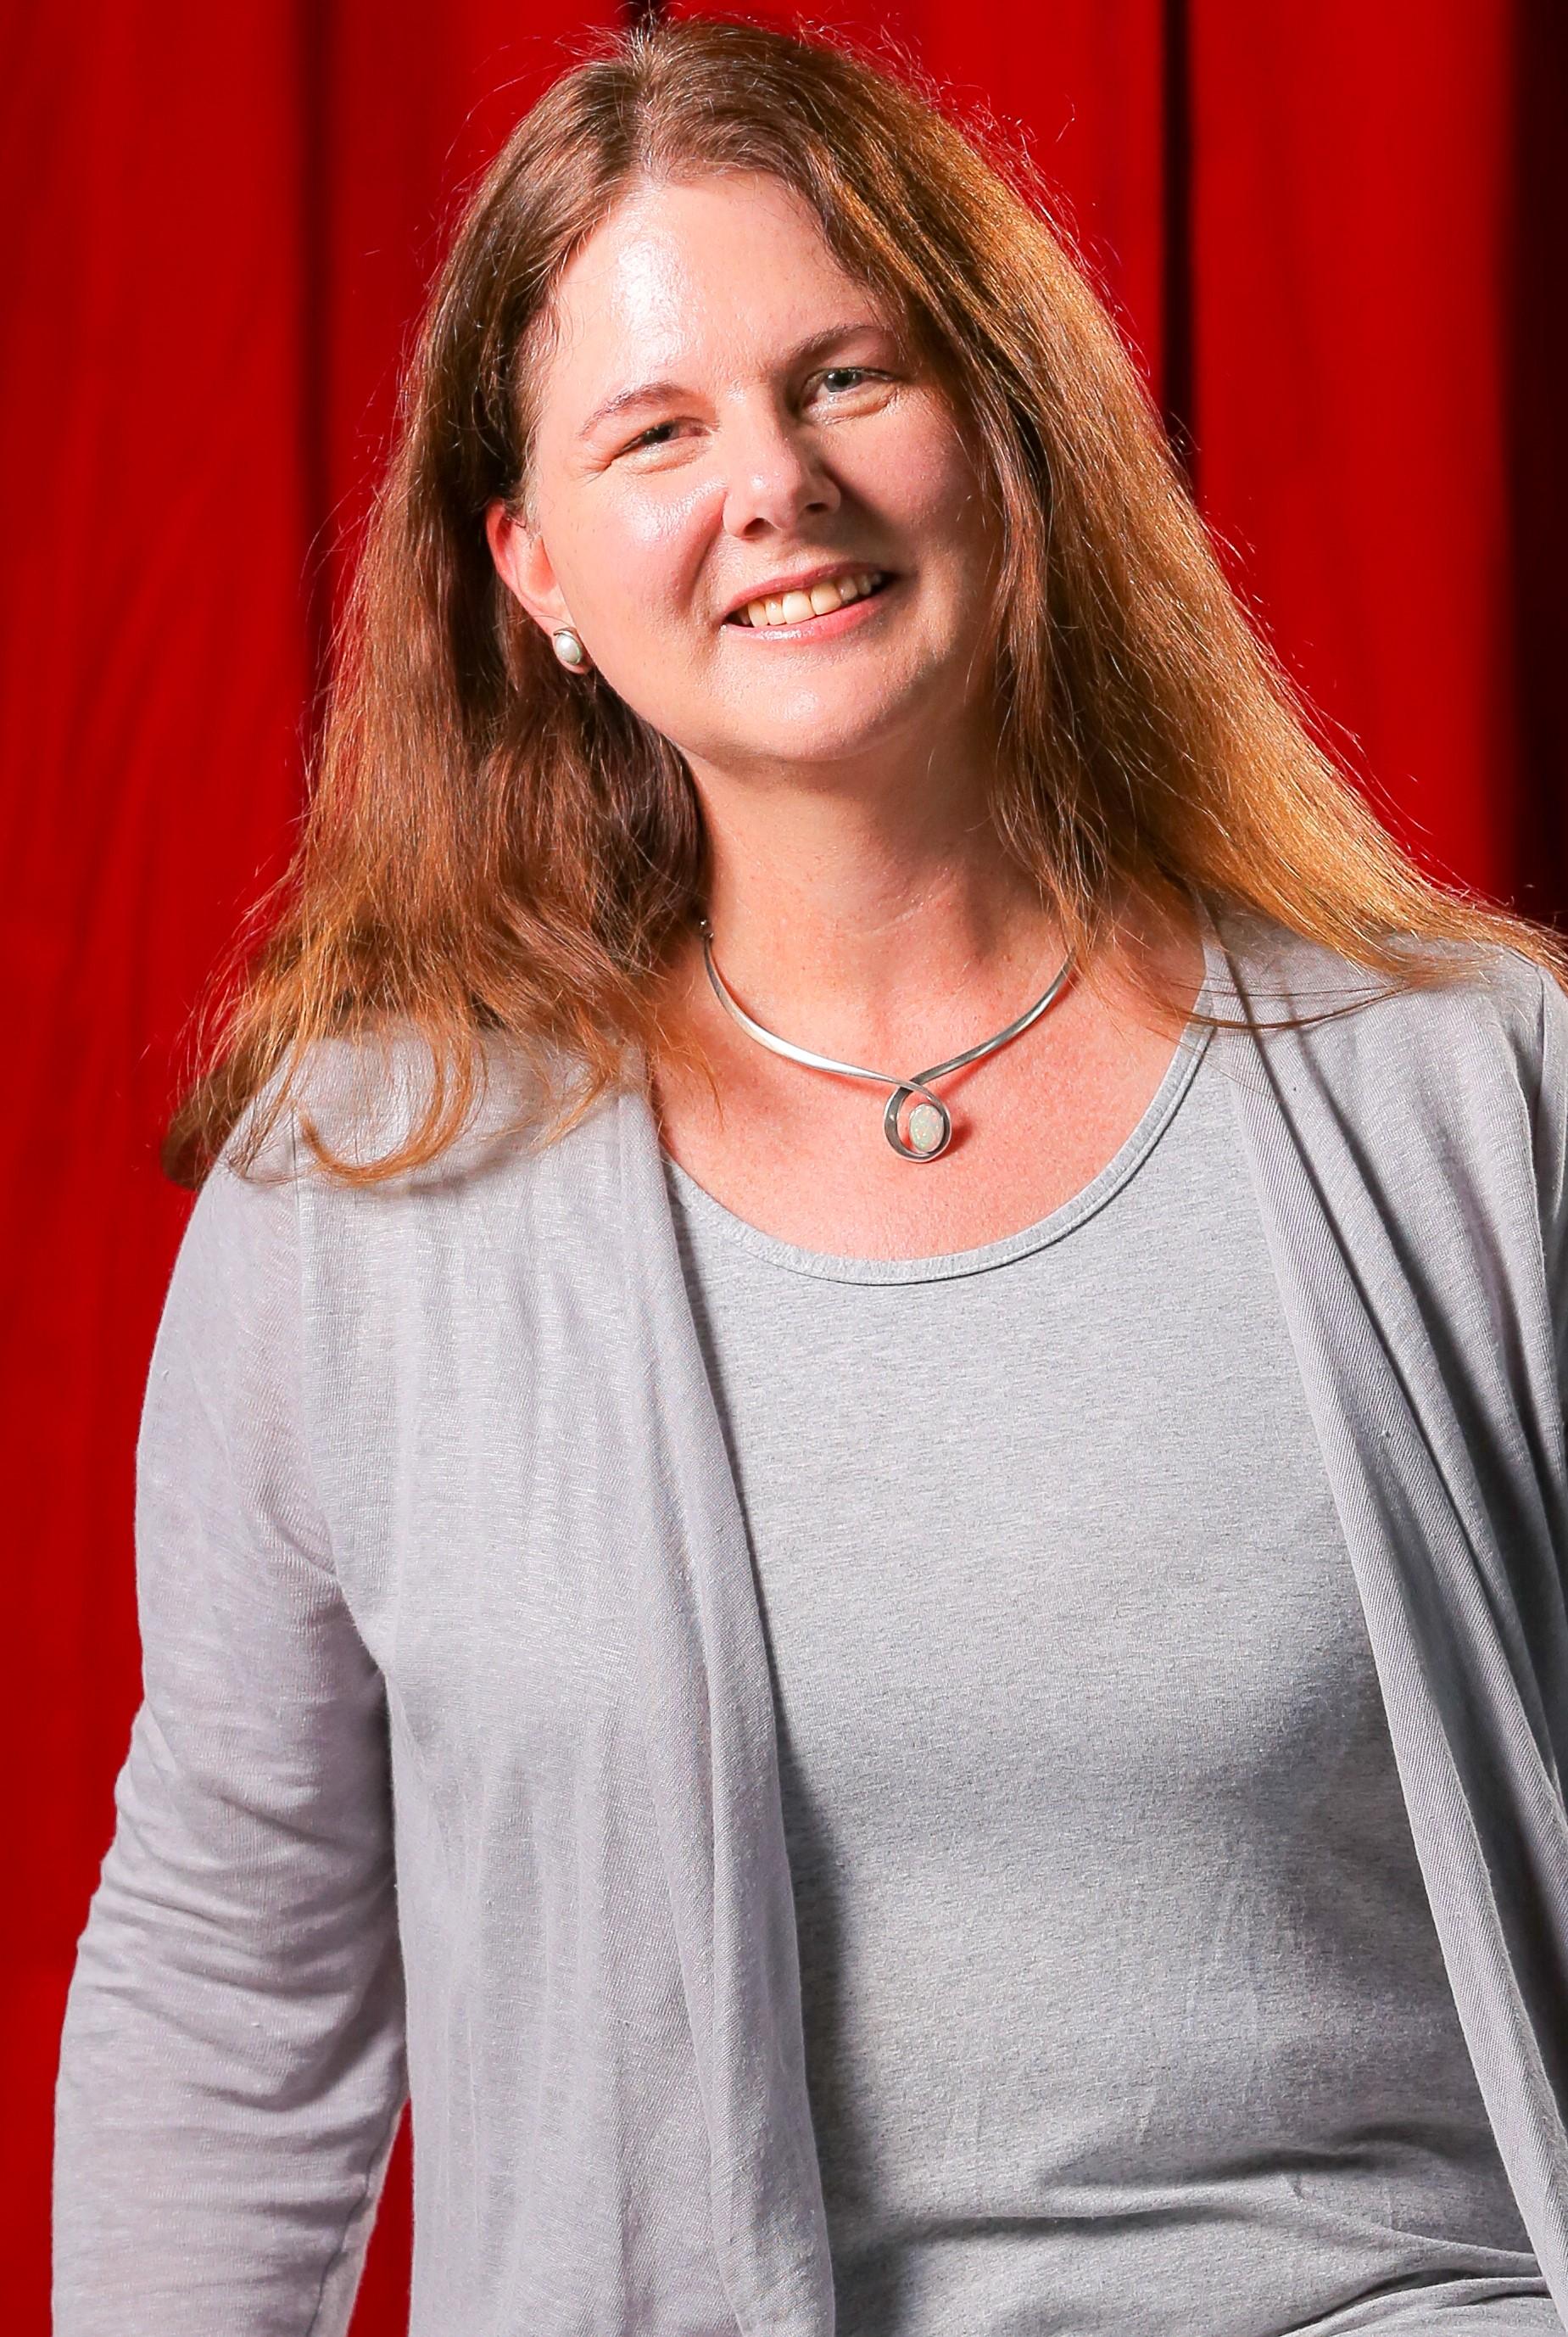 Professor Jennie Shaw